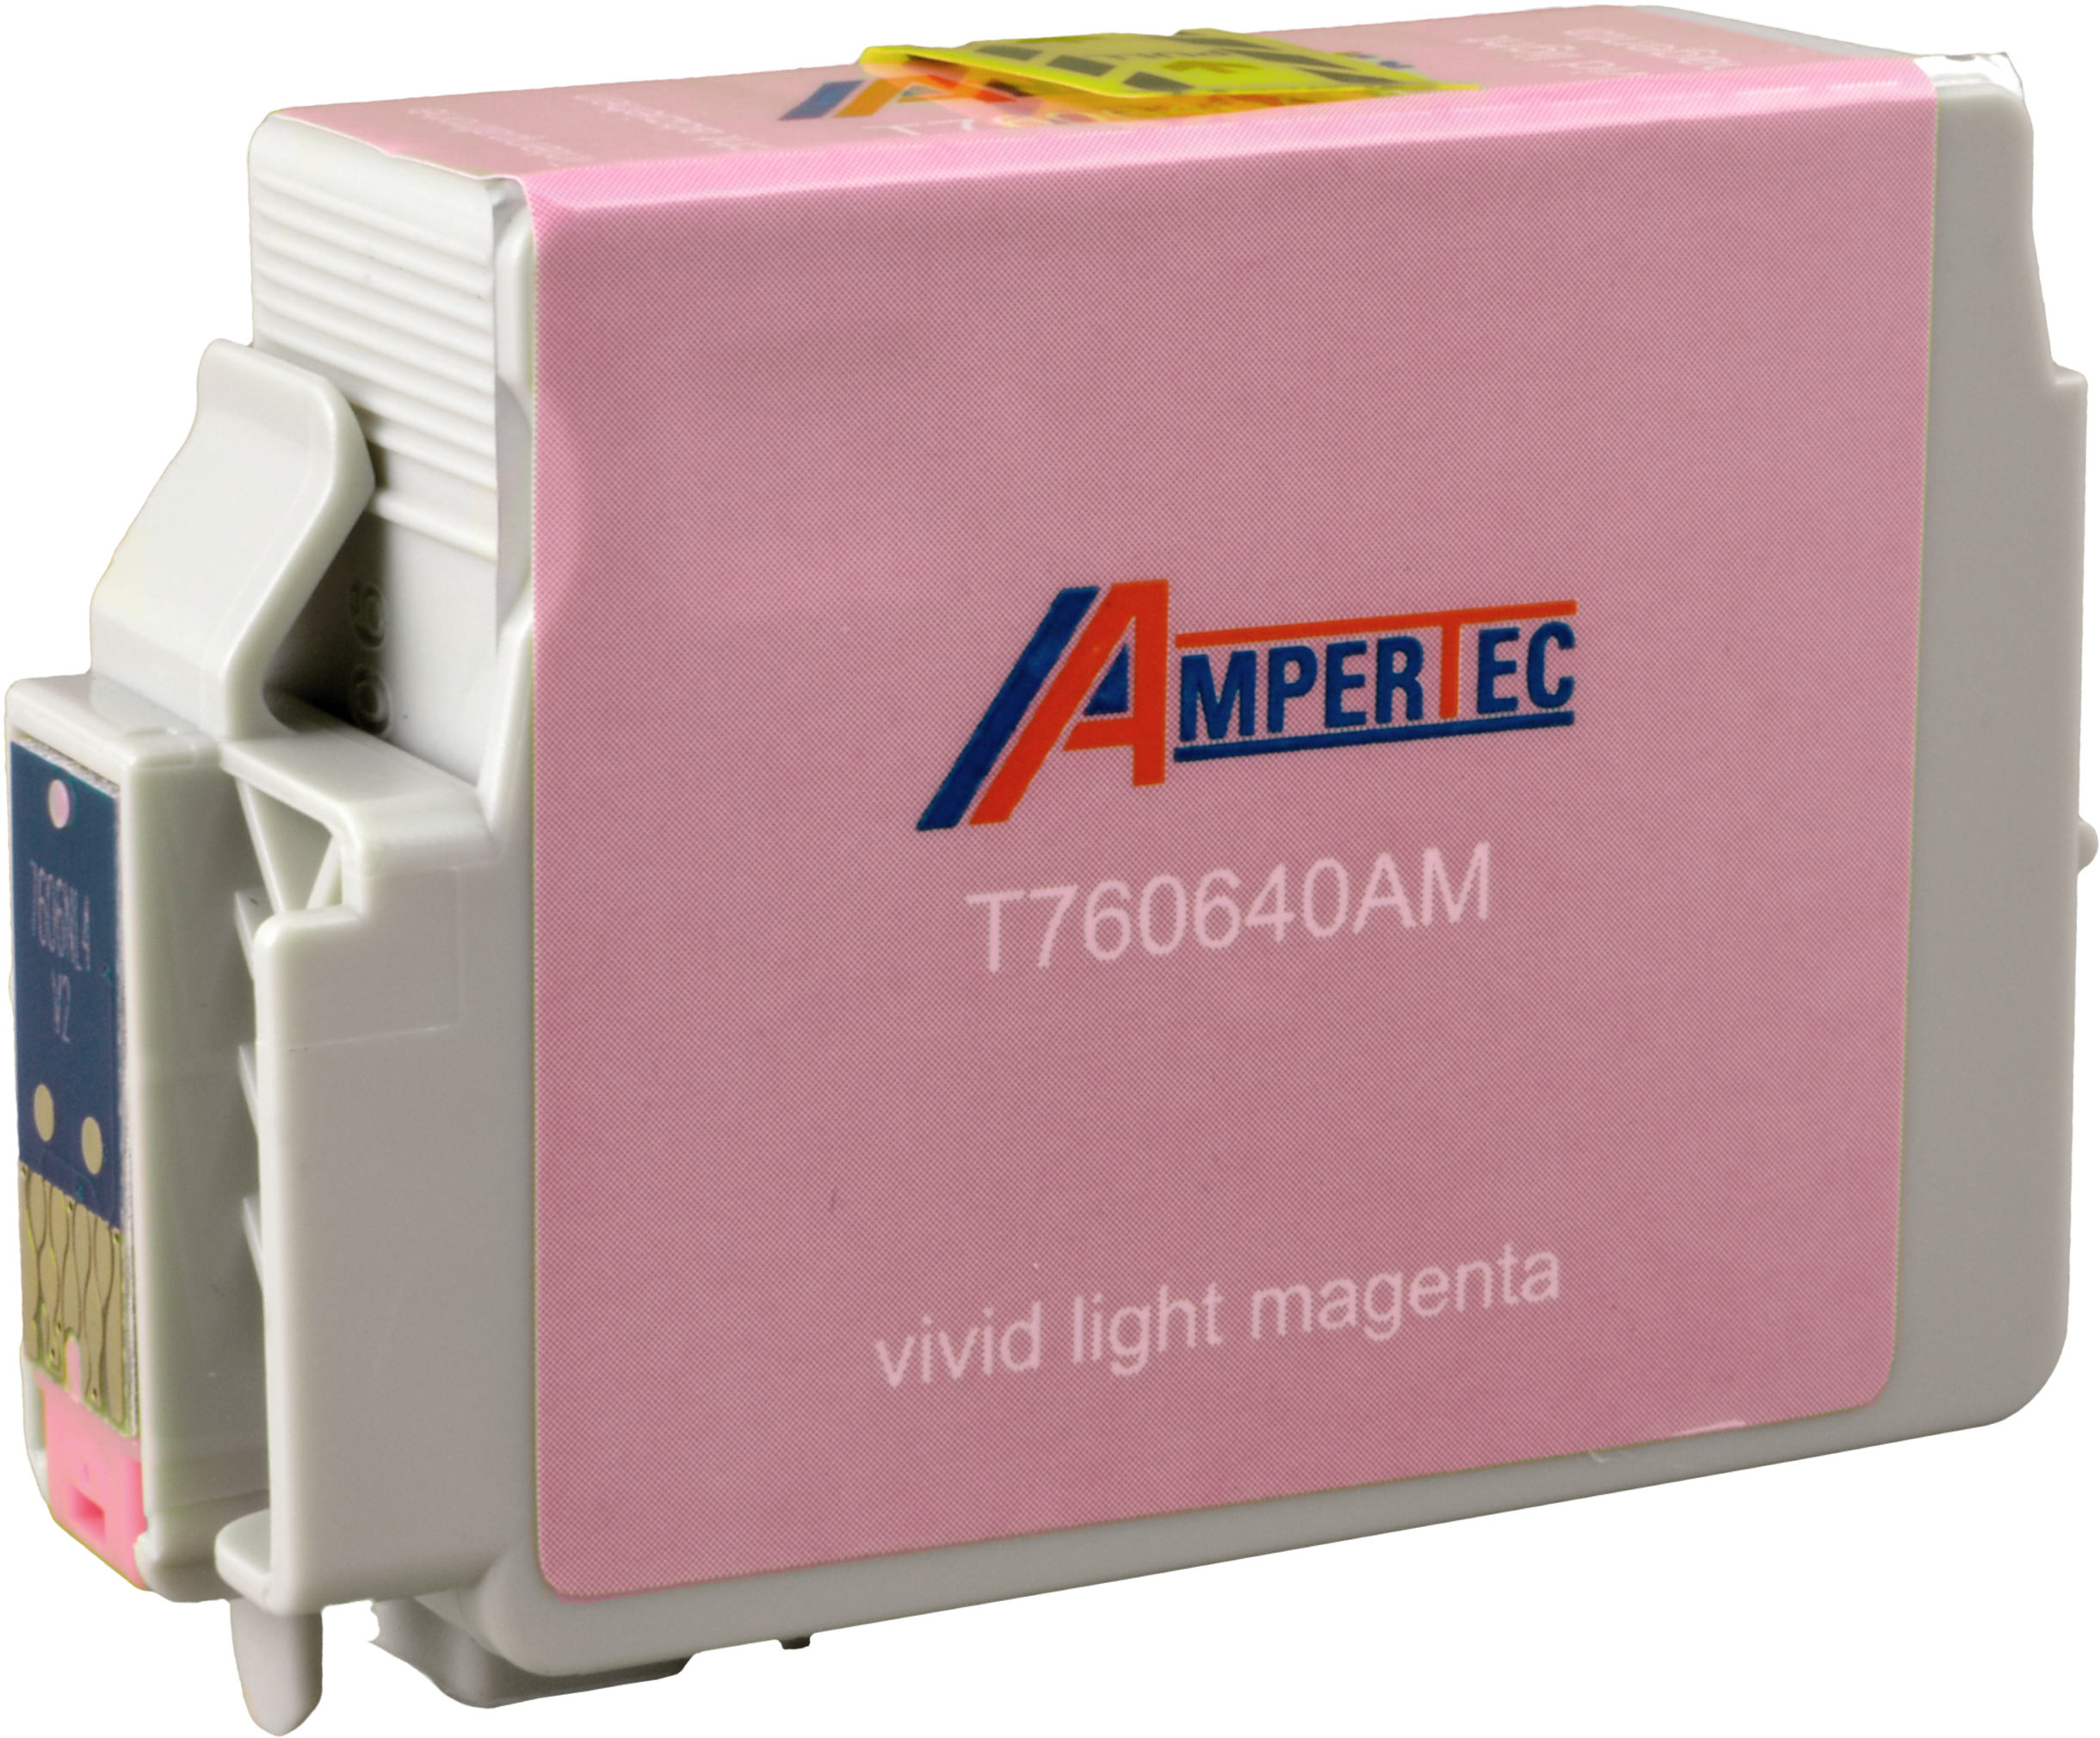 Ampertec Tinte für Epson C13T76064010  vivid light magenta